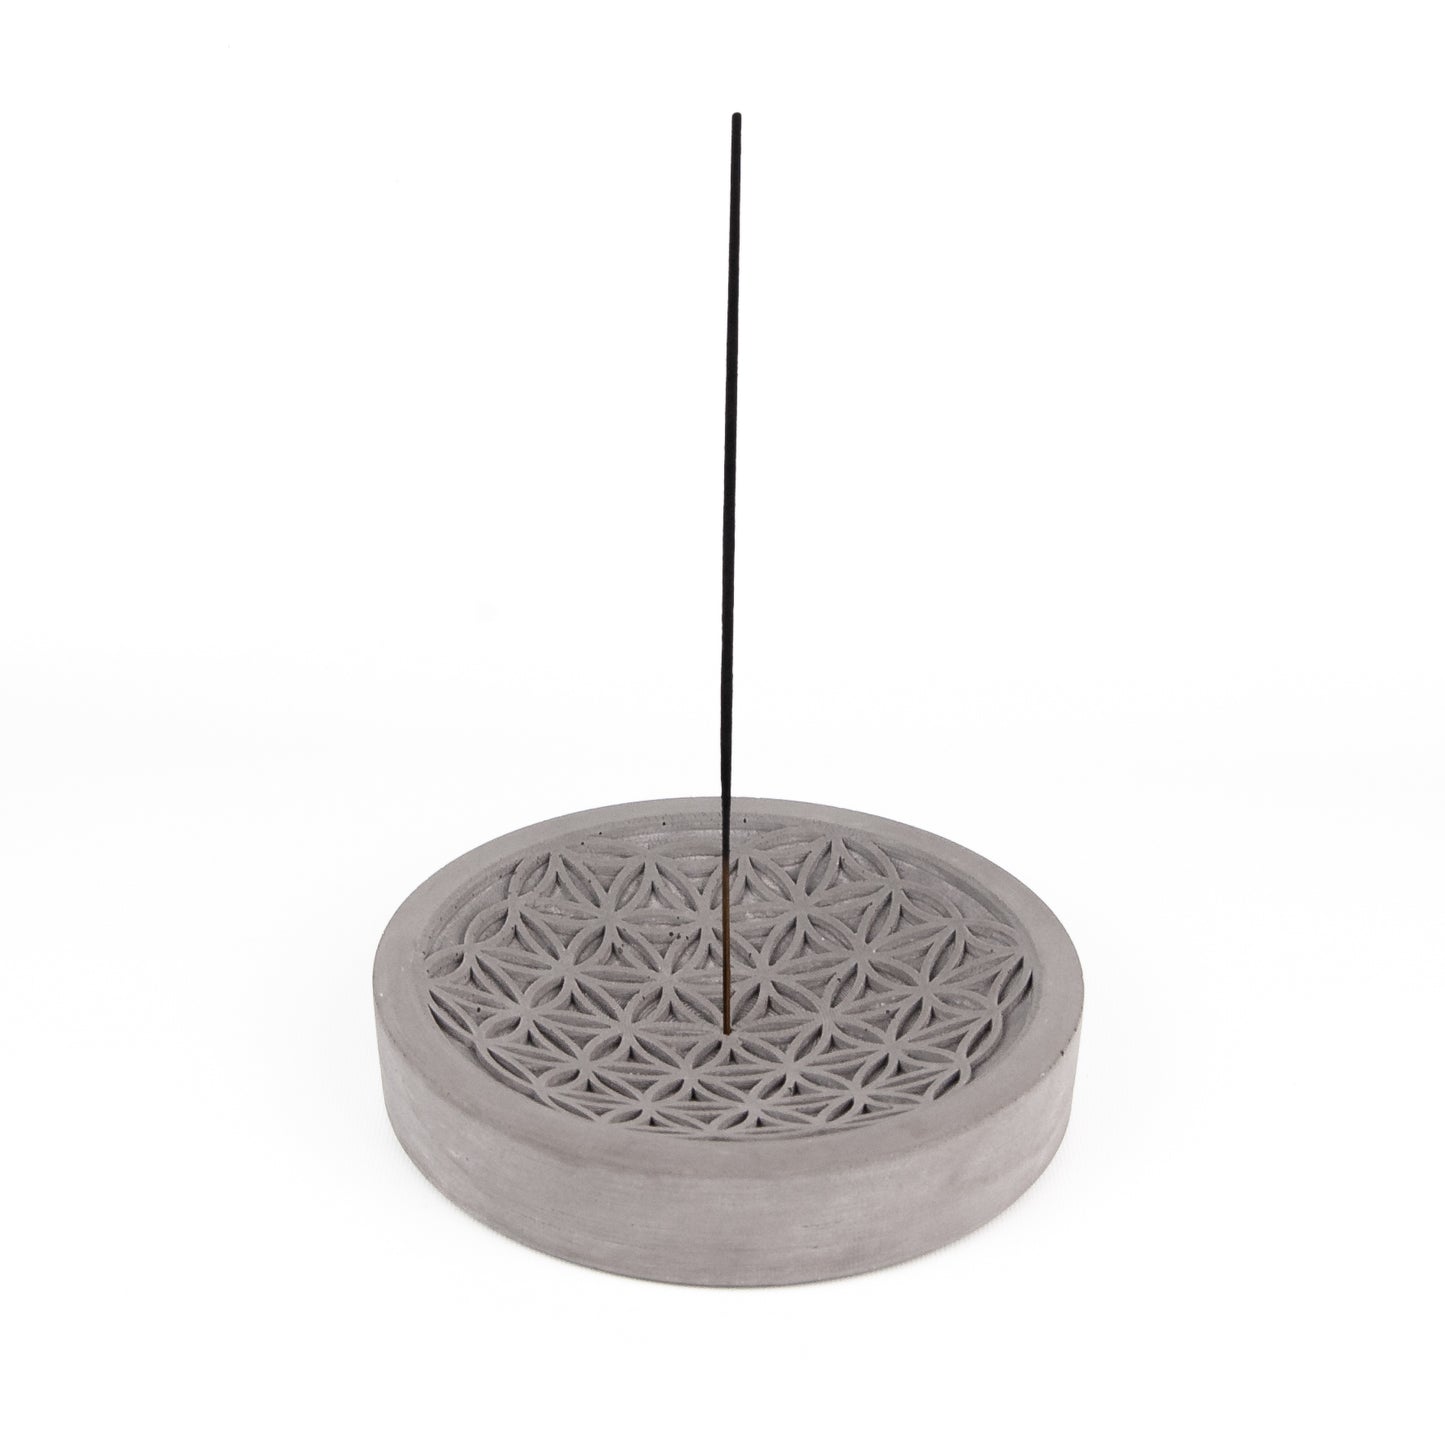 MANDALA 3 Taupe grey incense holder